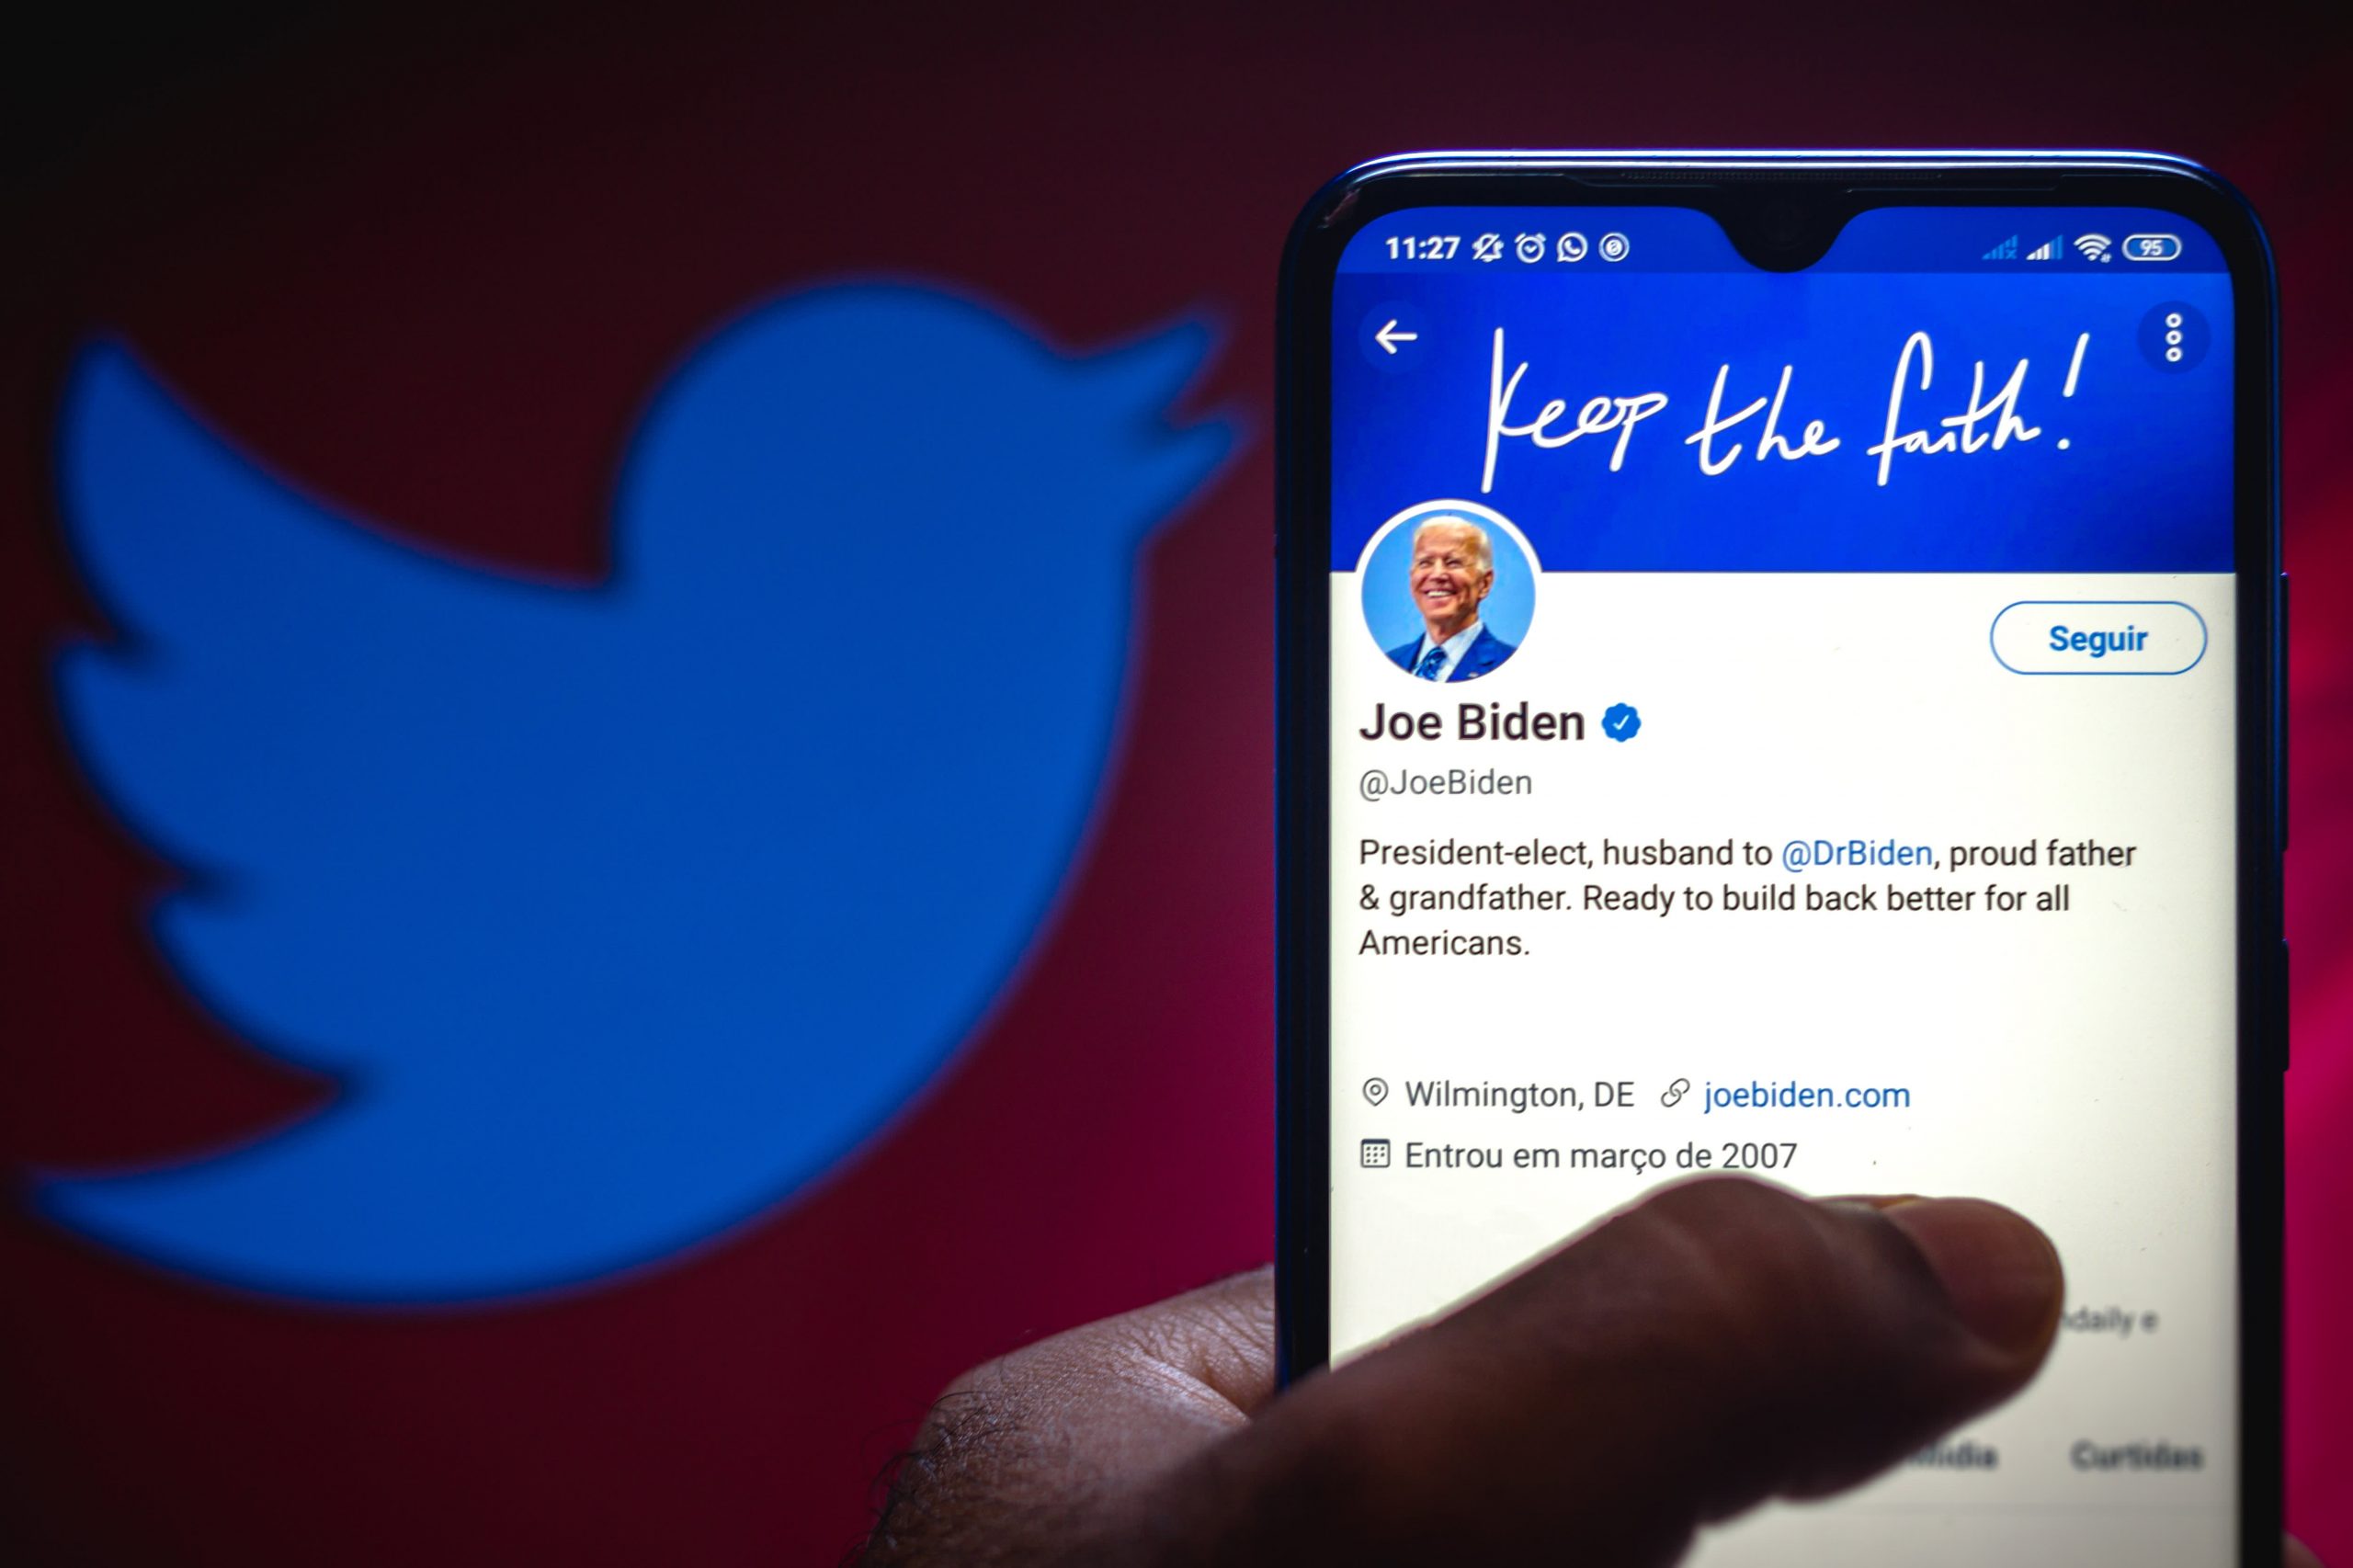 Trump got all of Obama's followers on official Twitter accounts, but Biden won't get Trump's